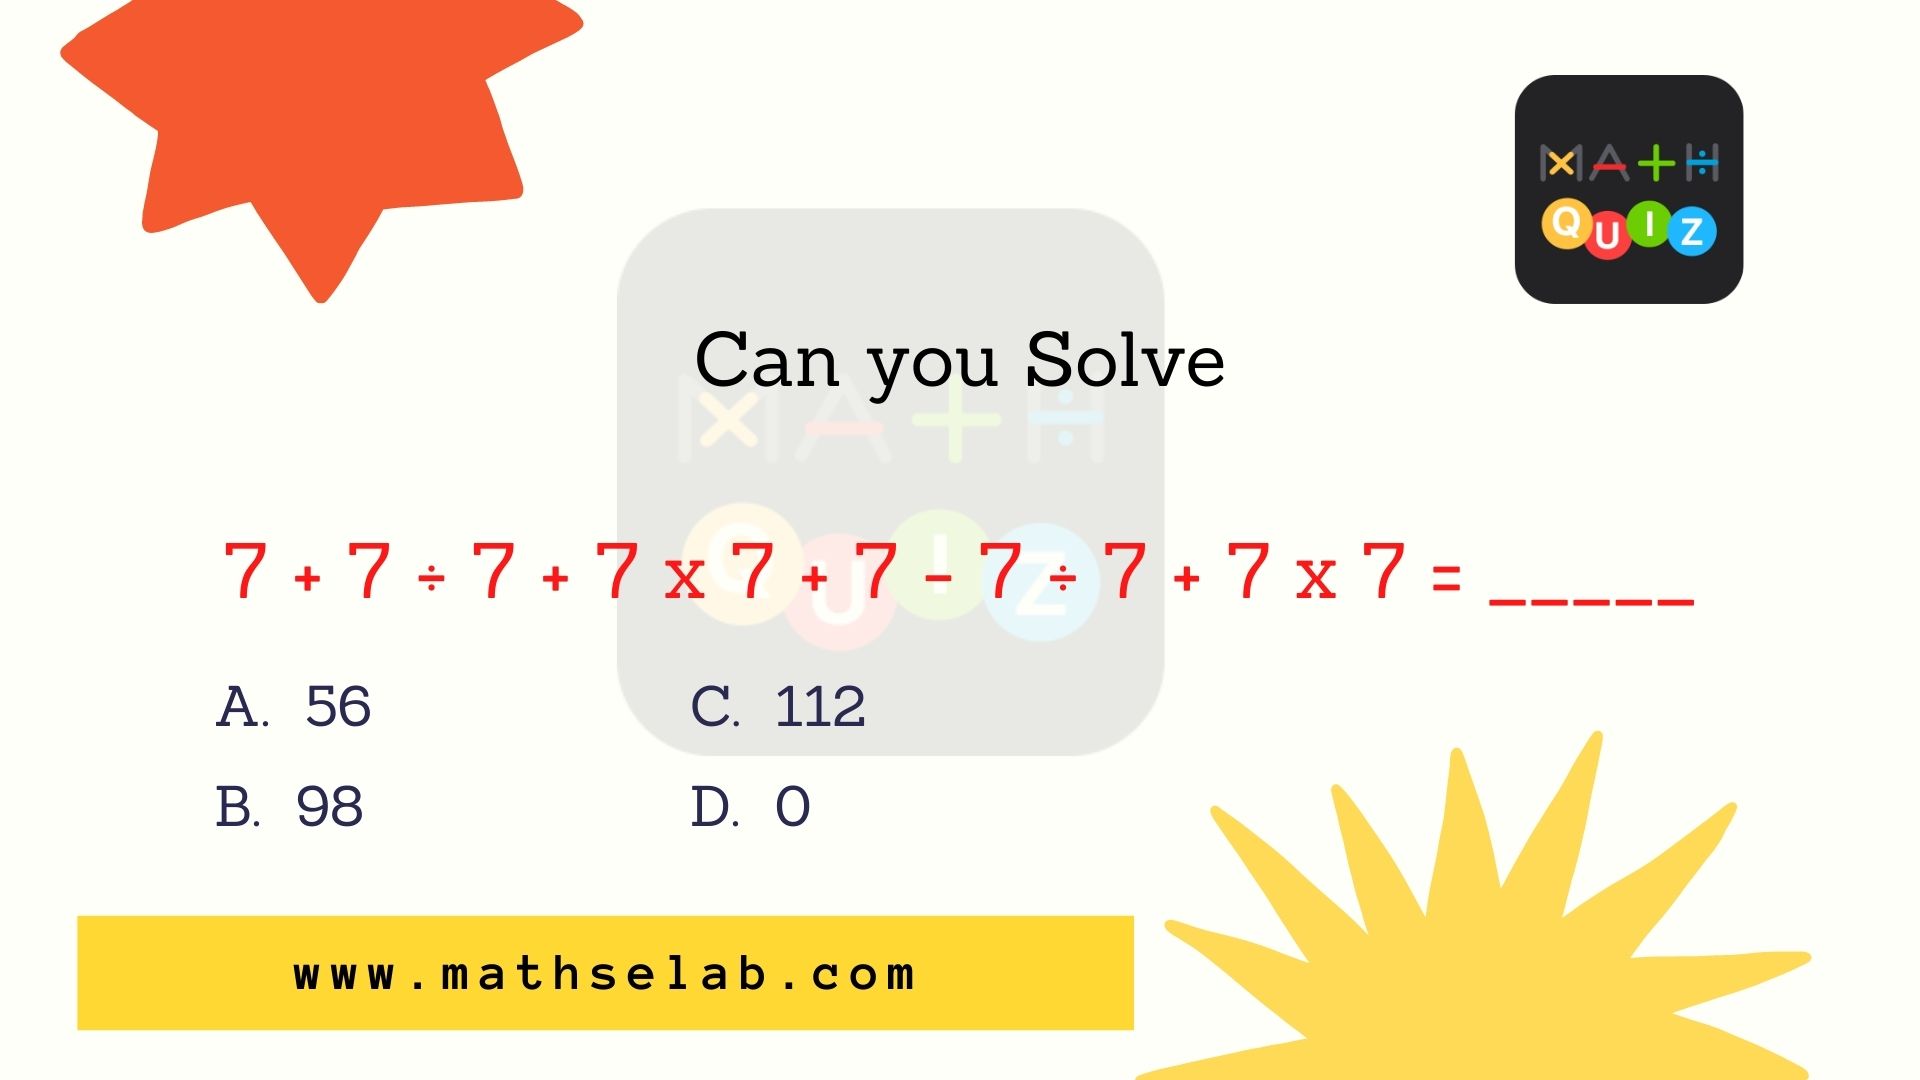 Can you Solve 7 + 7 ÷ 7 + 7 x 7 + 7 − 7 ÷ 7 + 7 x 7 = ? - mathselab.com